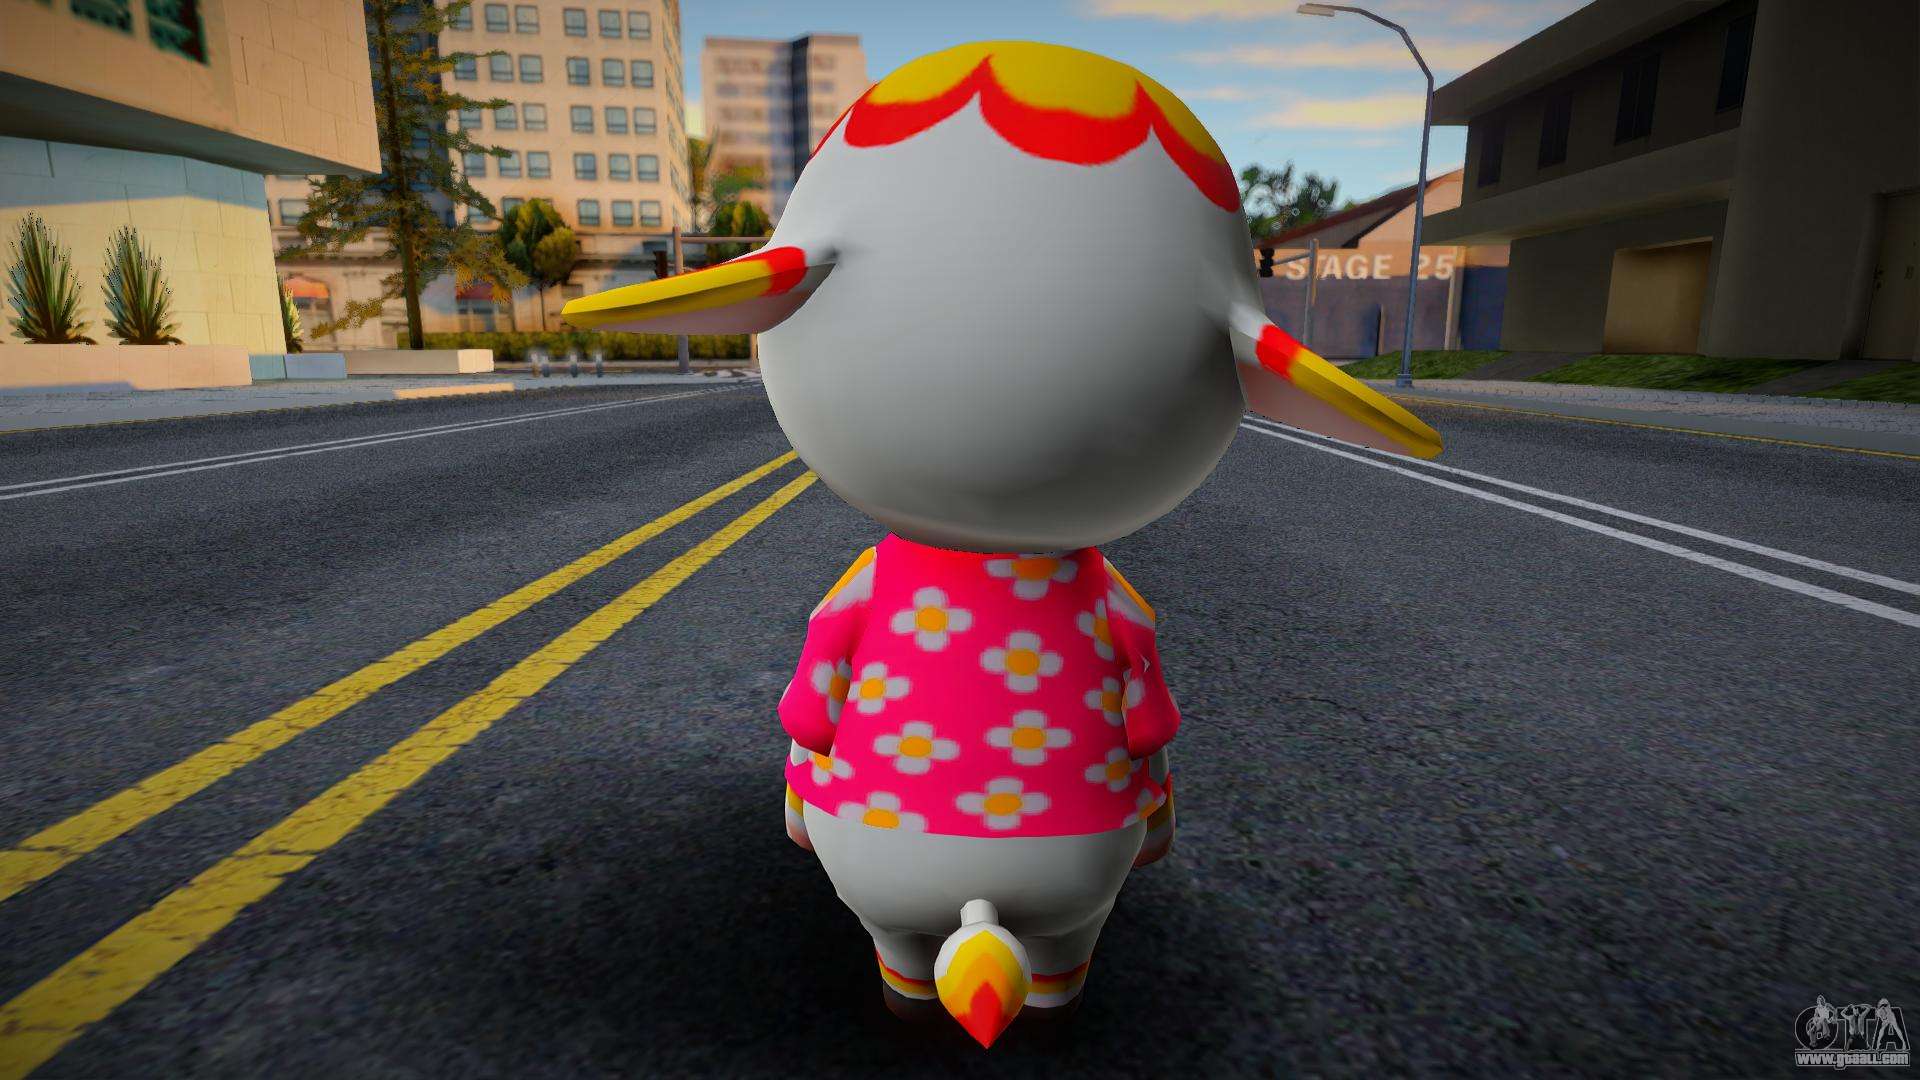 Margie - Animal Crossing Elephant for GTA San Andreas